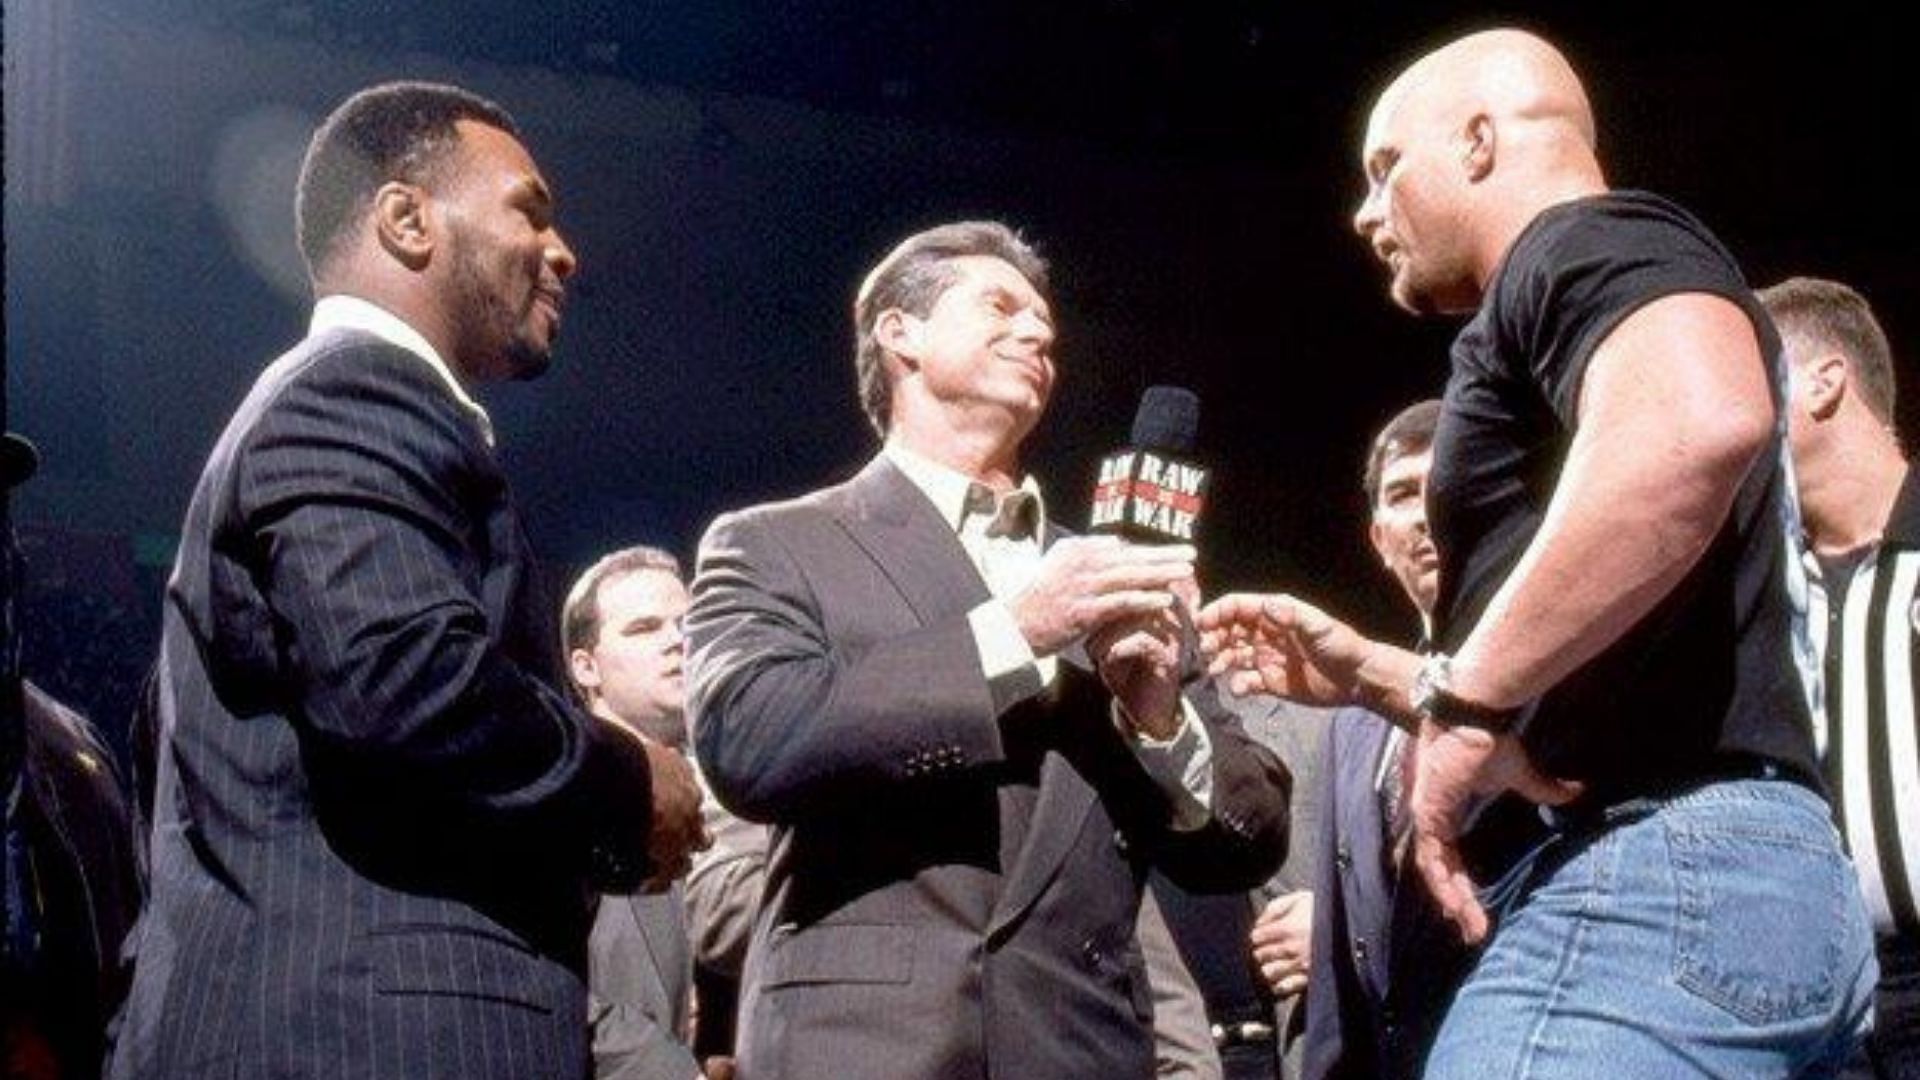 Mike Tyson, Vince McMahon, and Steve Austin